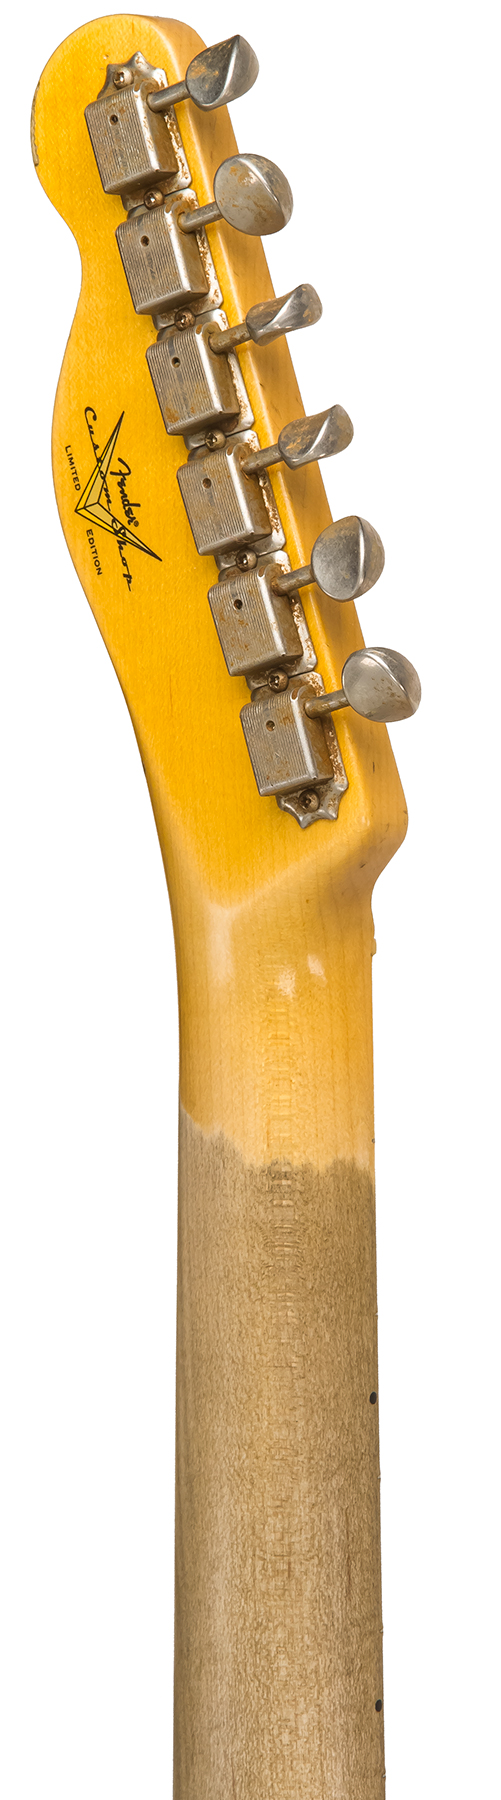 Fender Custom Shop Tele Custom 1963 2020 Ltd Rw #cz545983 - Relic Chartreuse Sparkle - Guitarra eléctrica con forma de tel - Variation 5